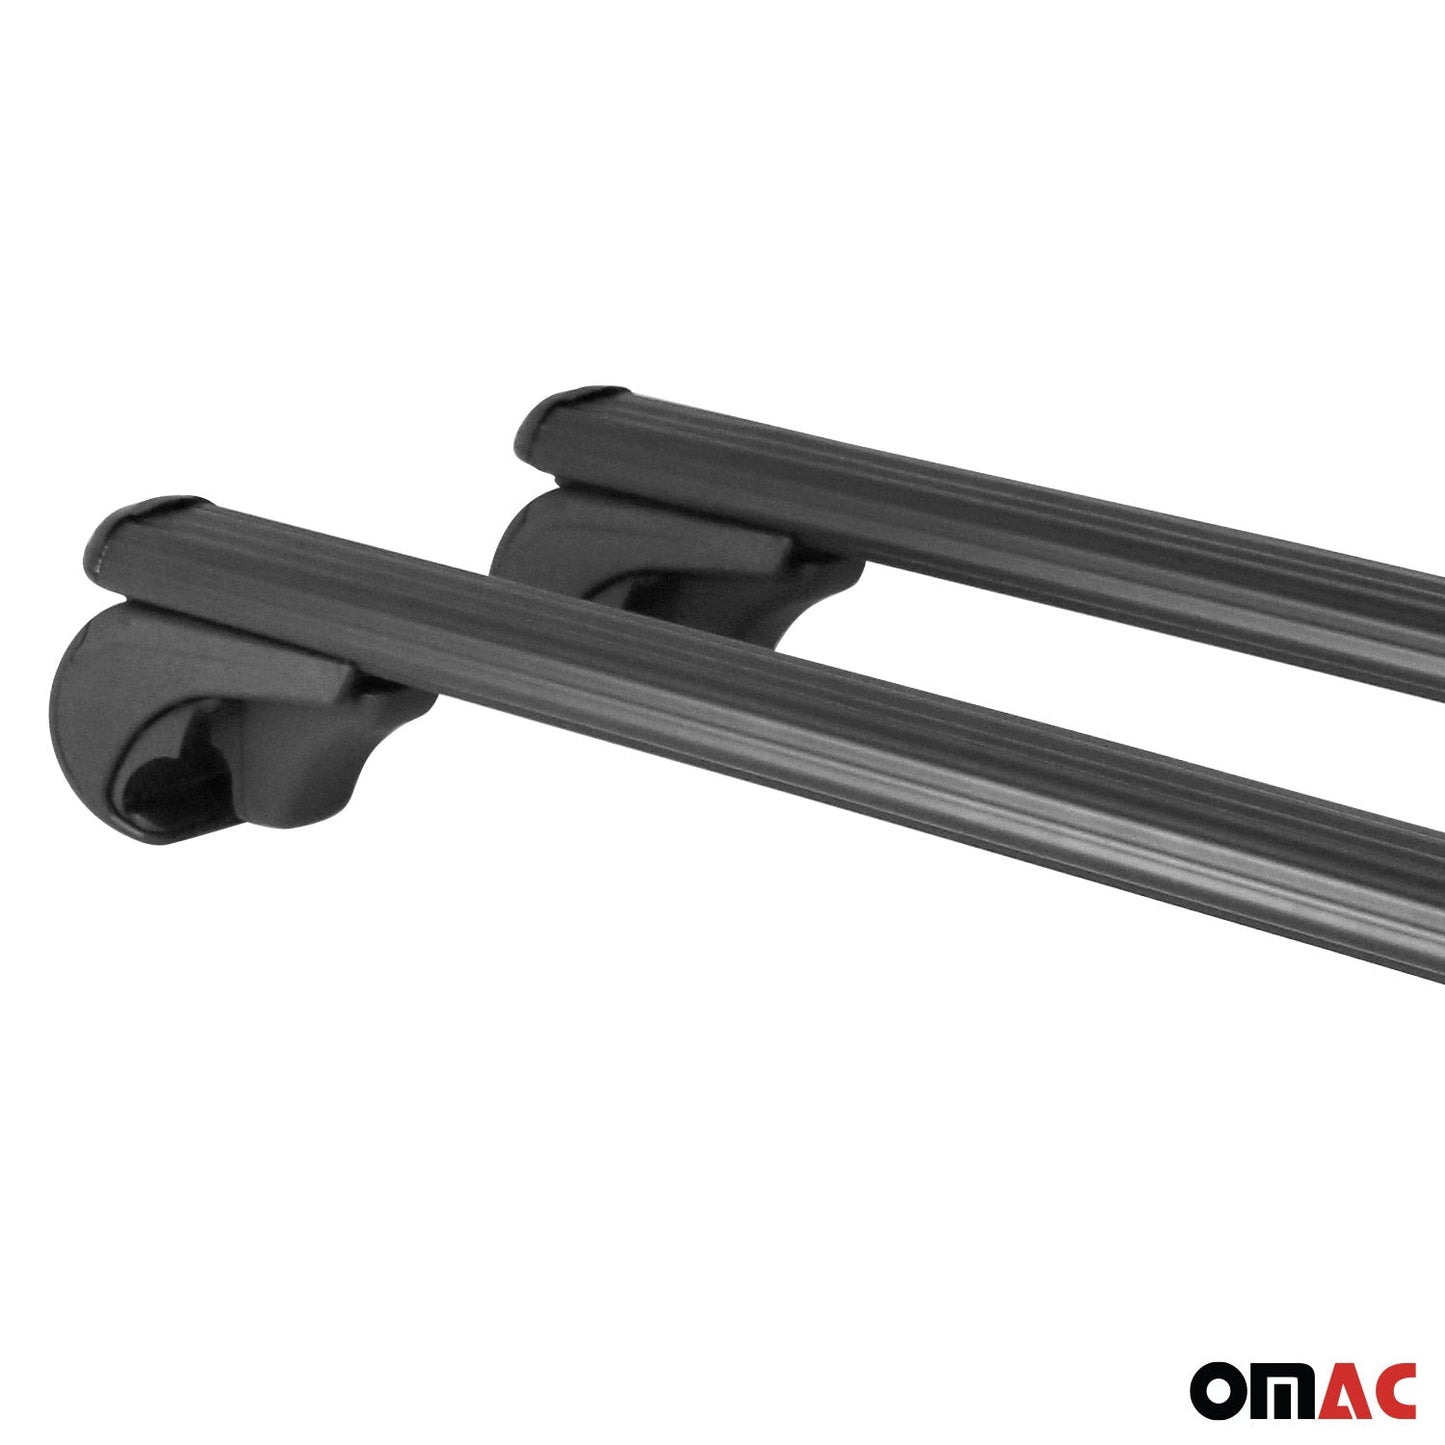 OMAC Lockable Roof Rack Cross Bars Luggage Carrier for Infiniti FX50 2009-2013 Black 39039696929MB